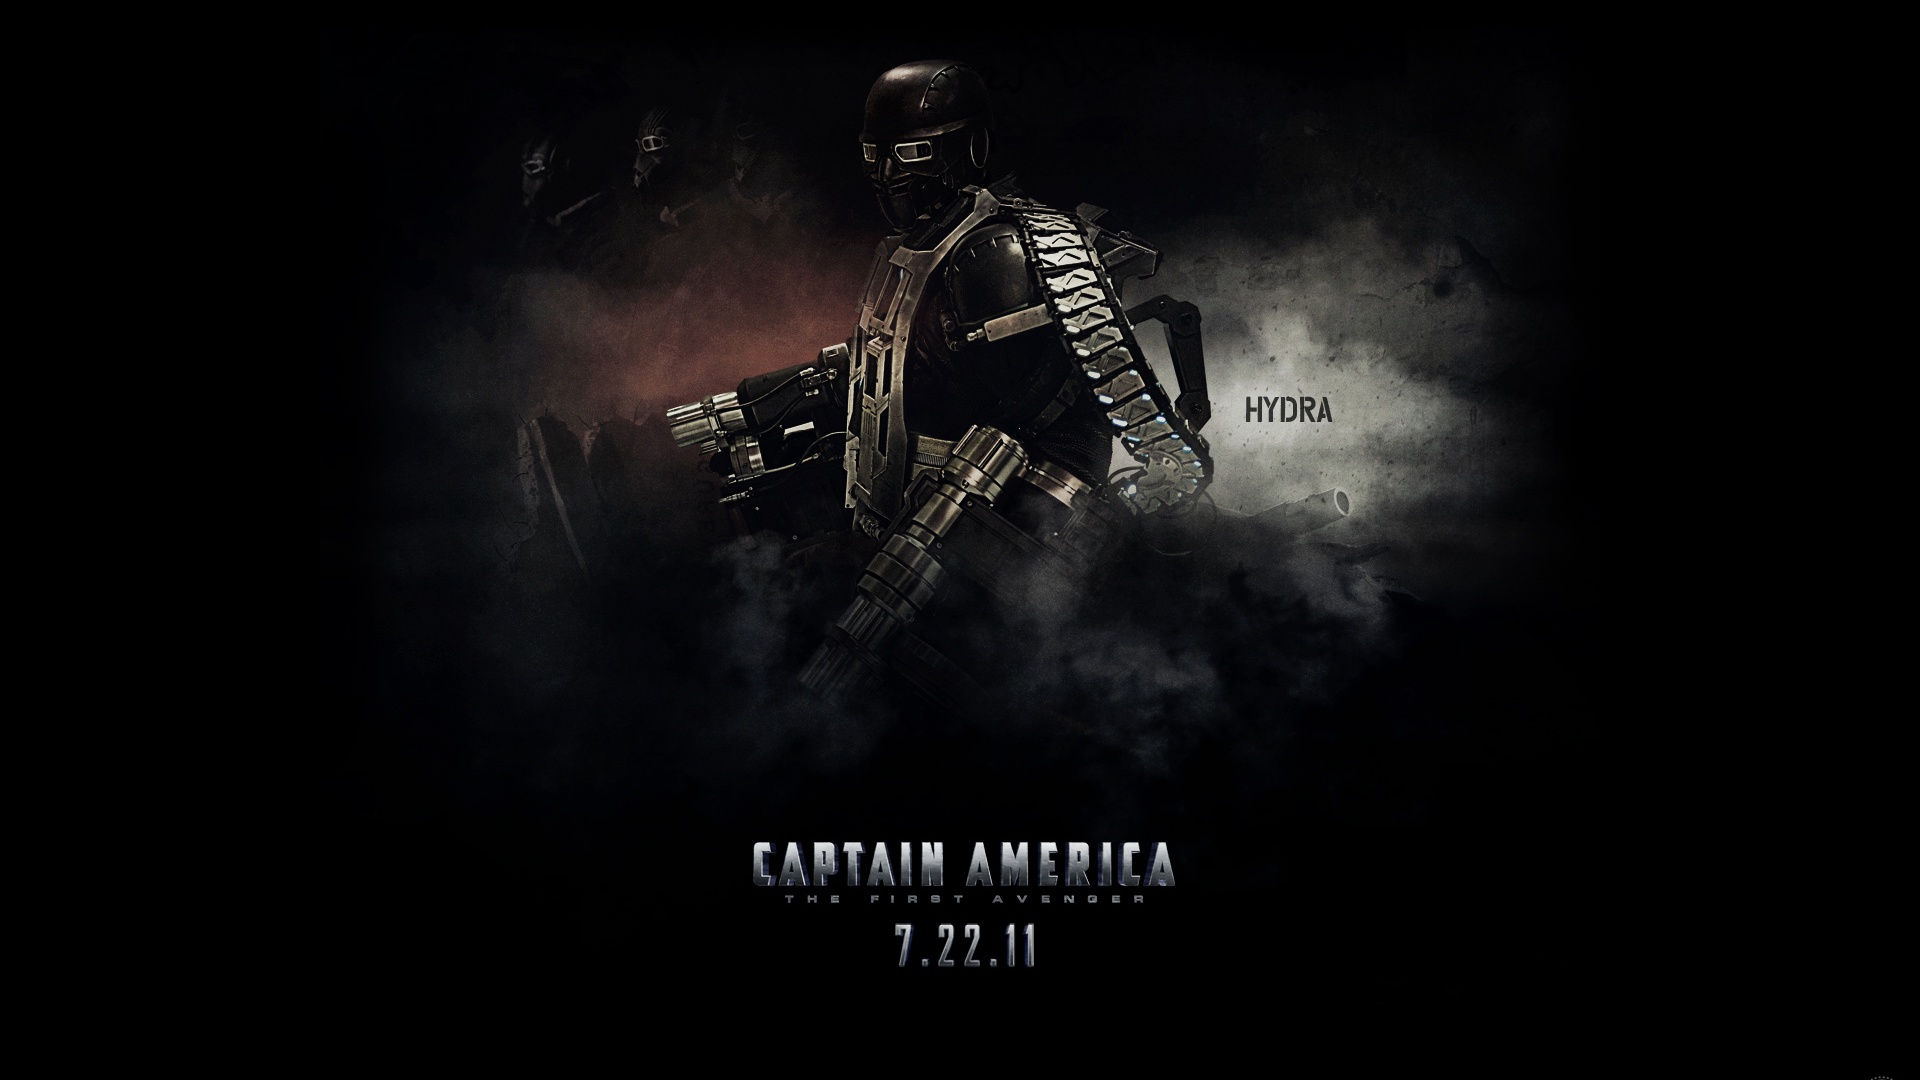 Captain America Movie Wallpaper Hydra